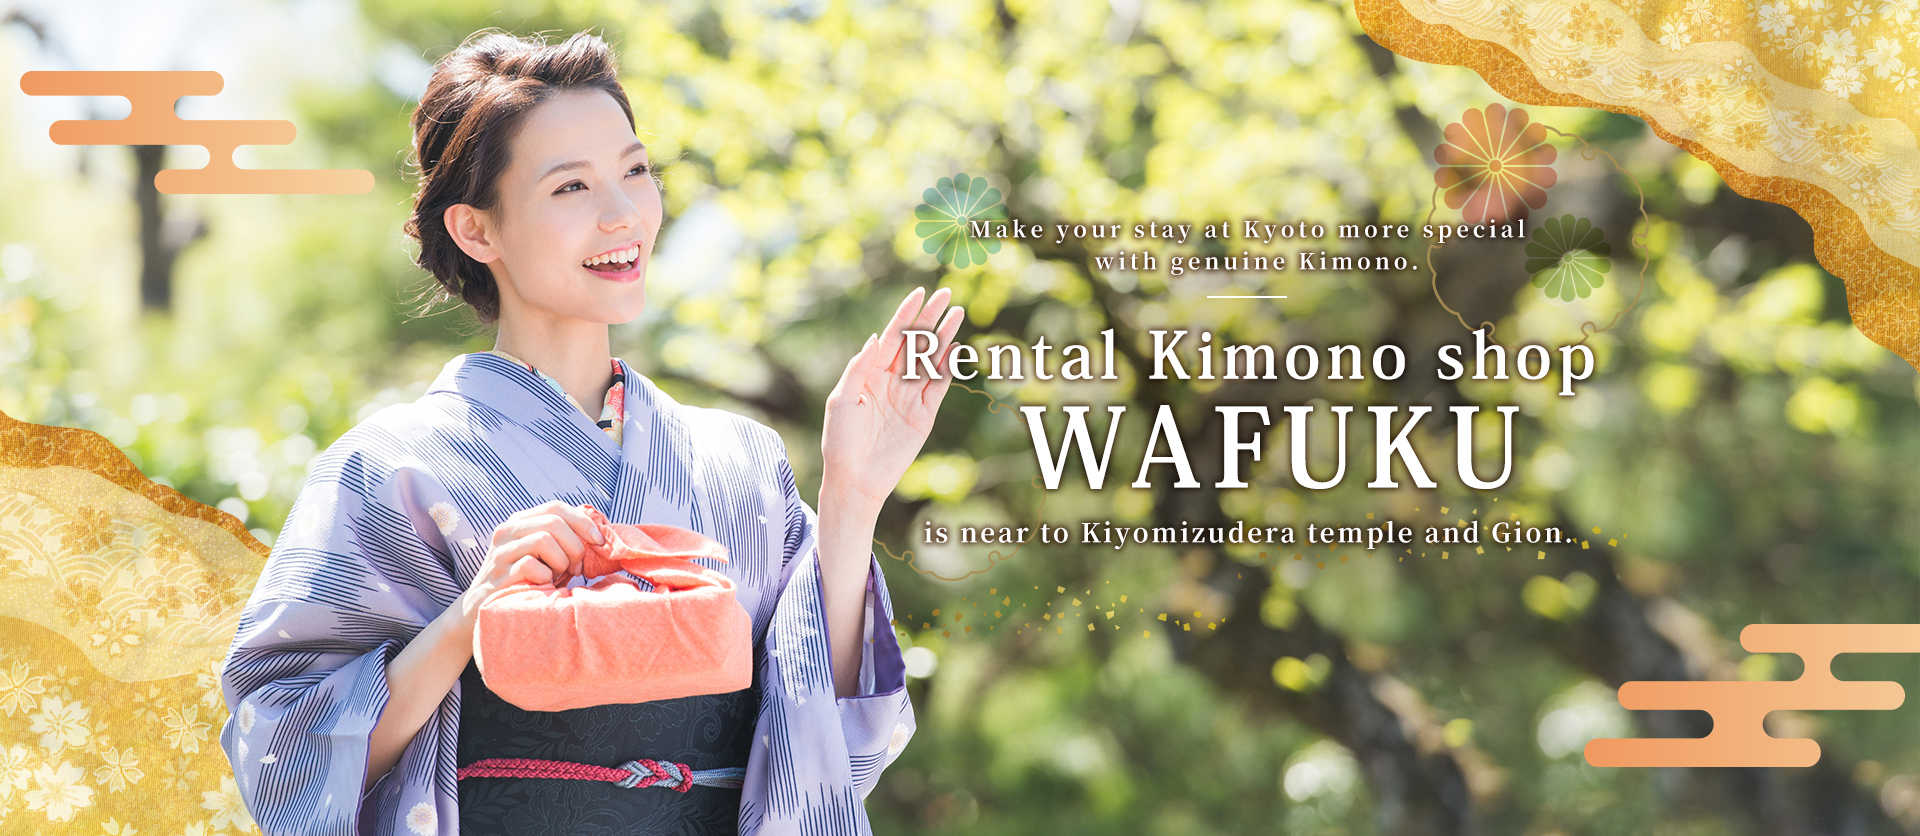 Rental Kimono shop WAFUKU is near to Kiyomizudera temple and Gion.